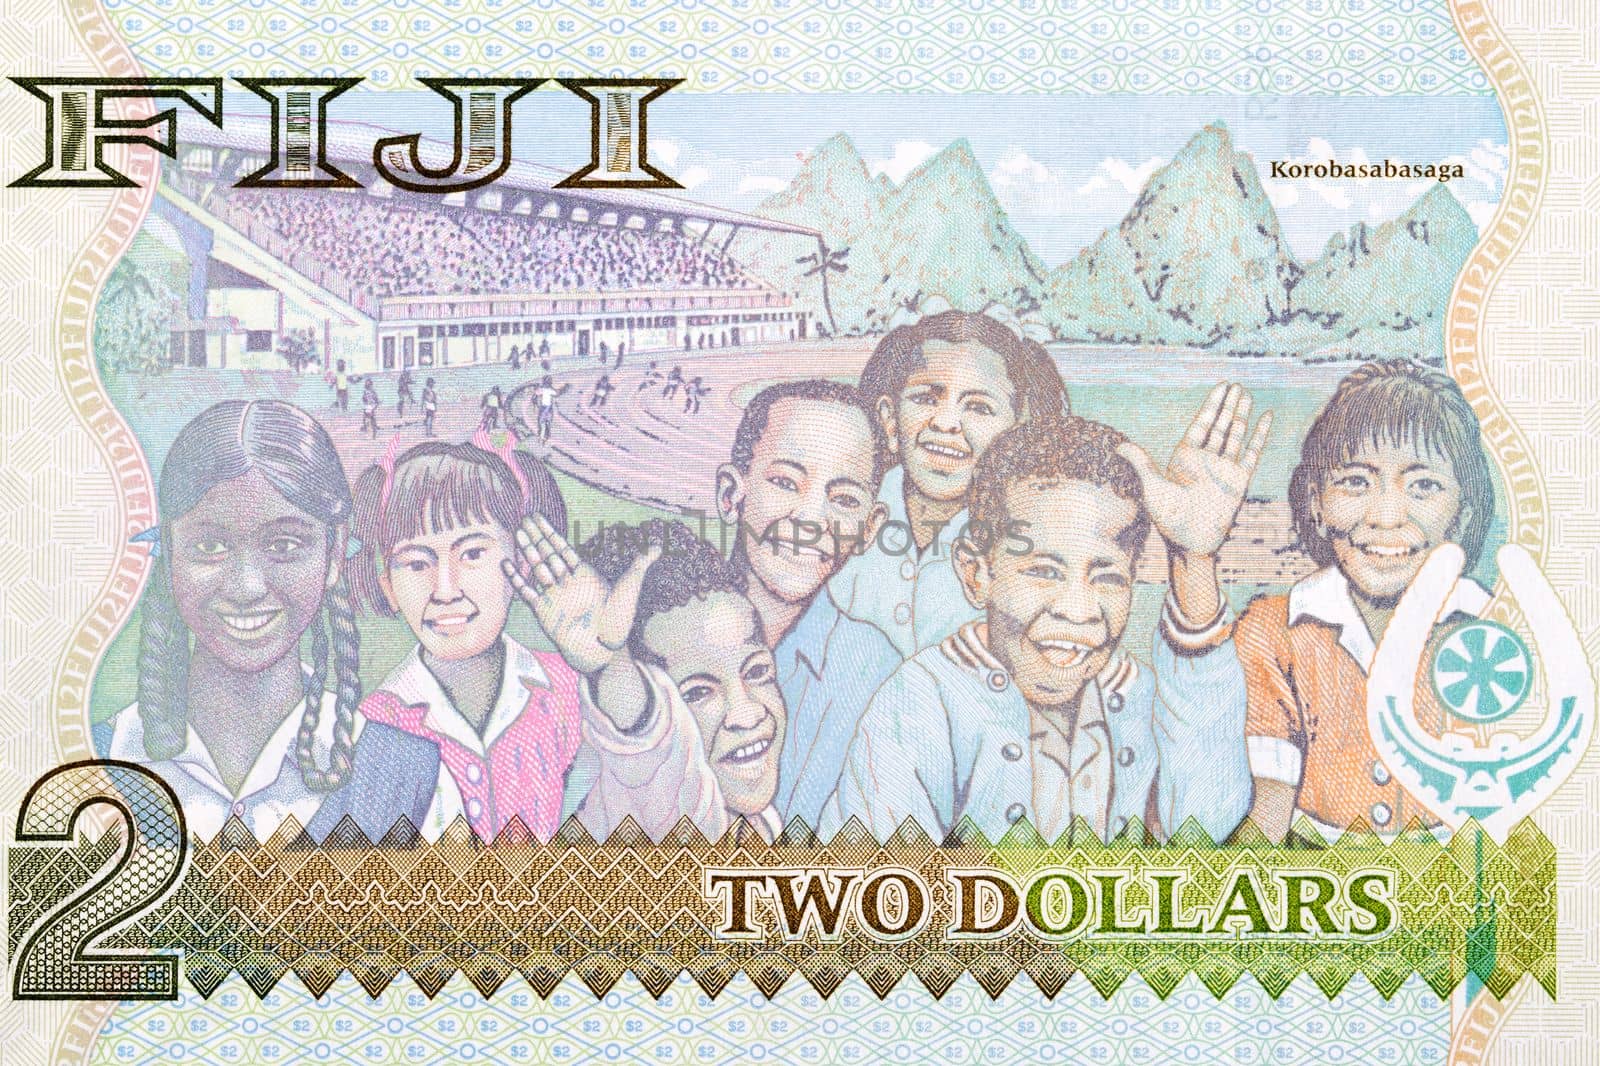 School children and Mt Uluinabukulevu mountain from Fijian money